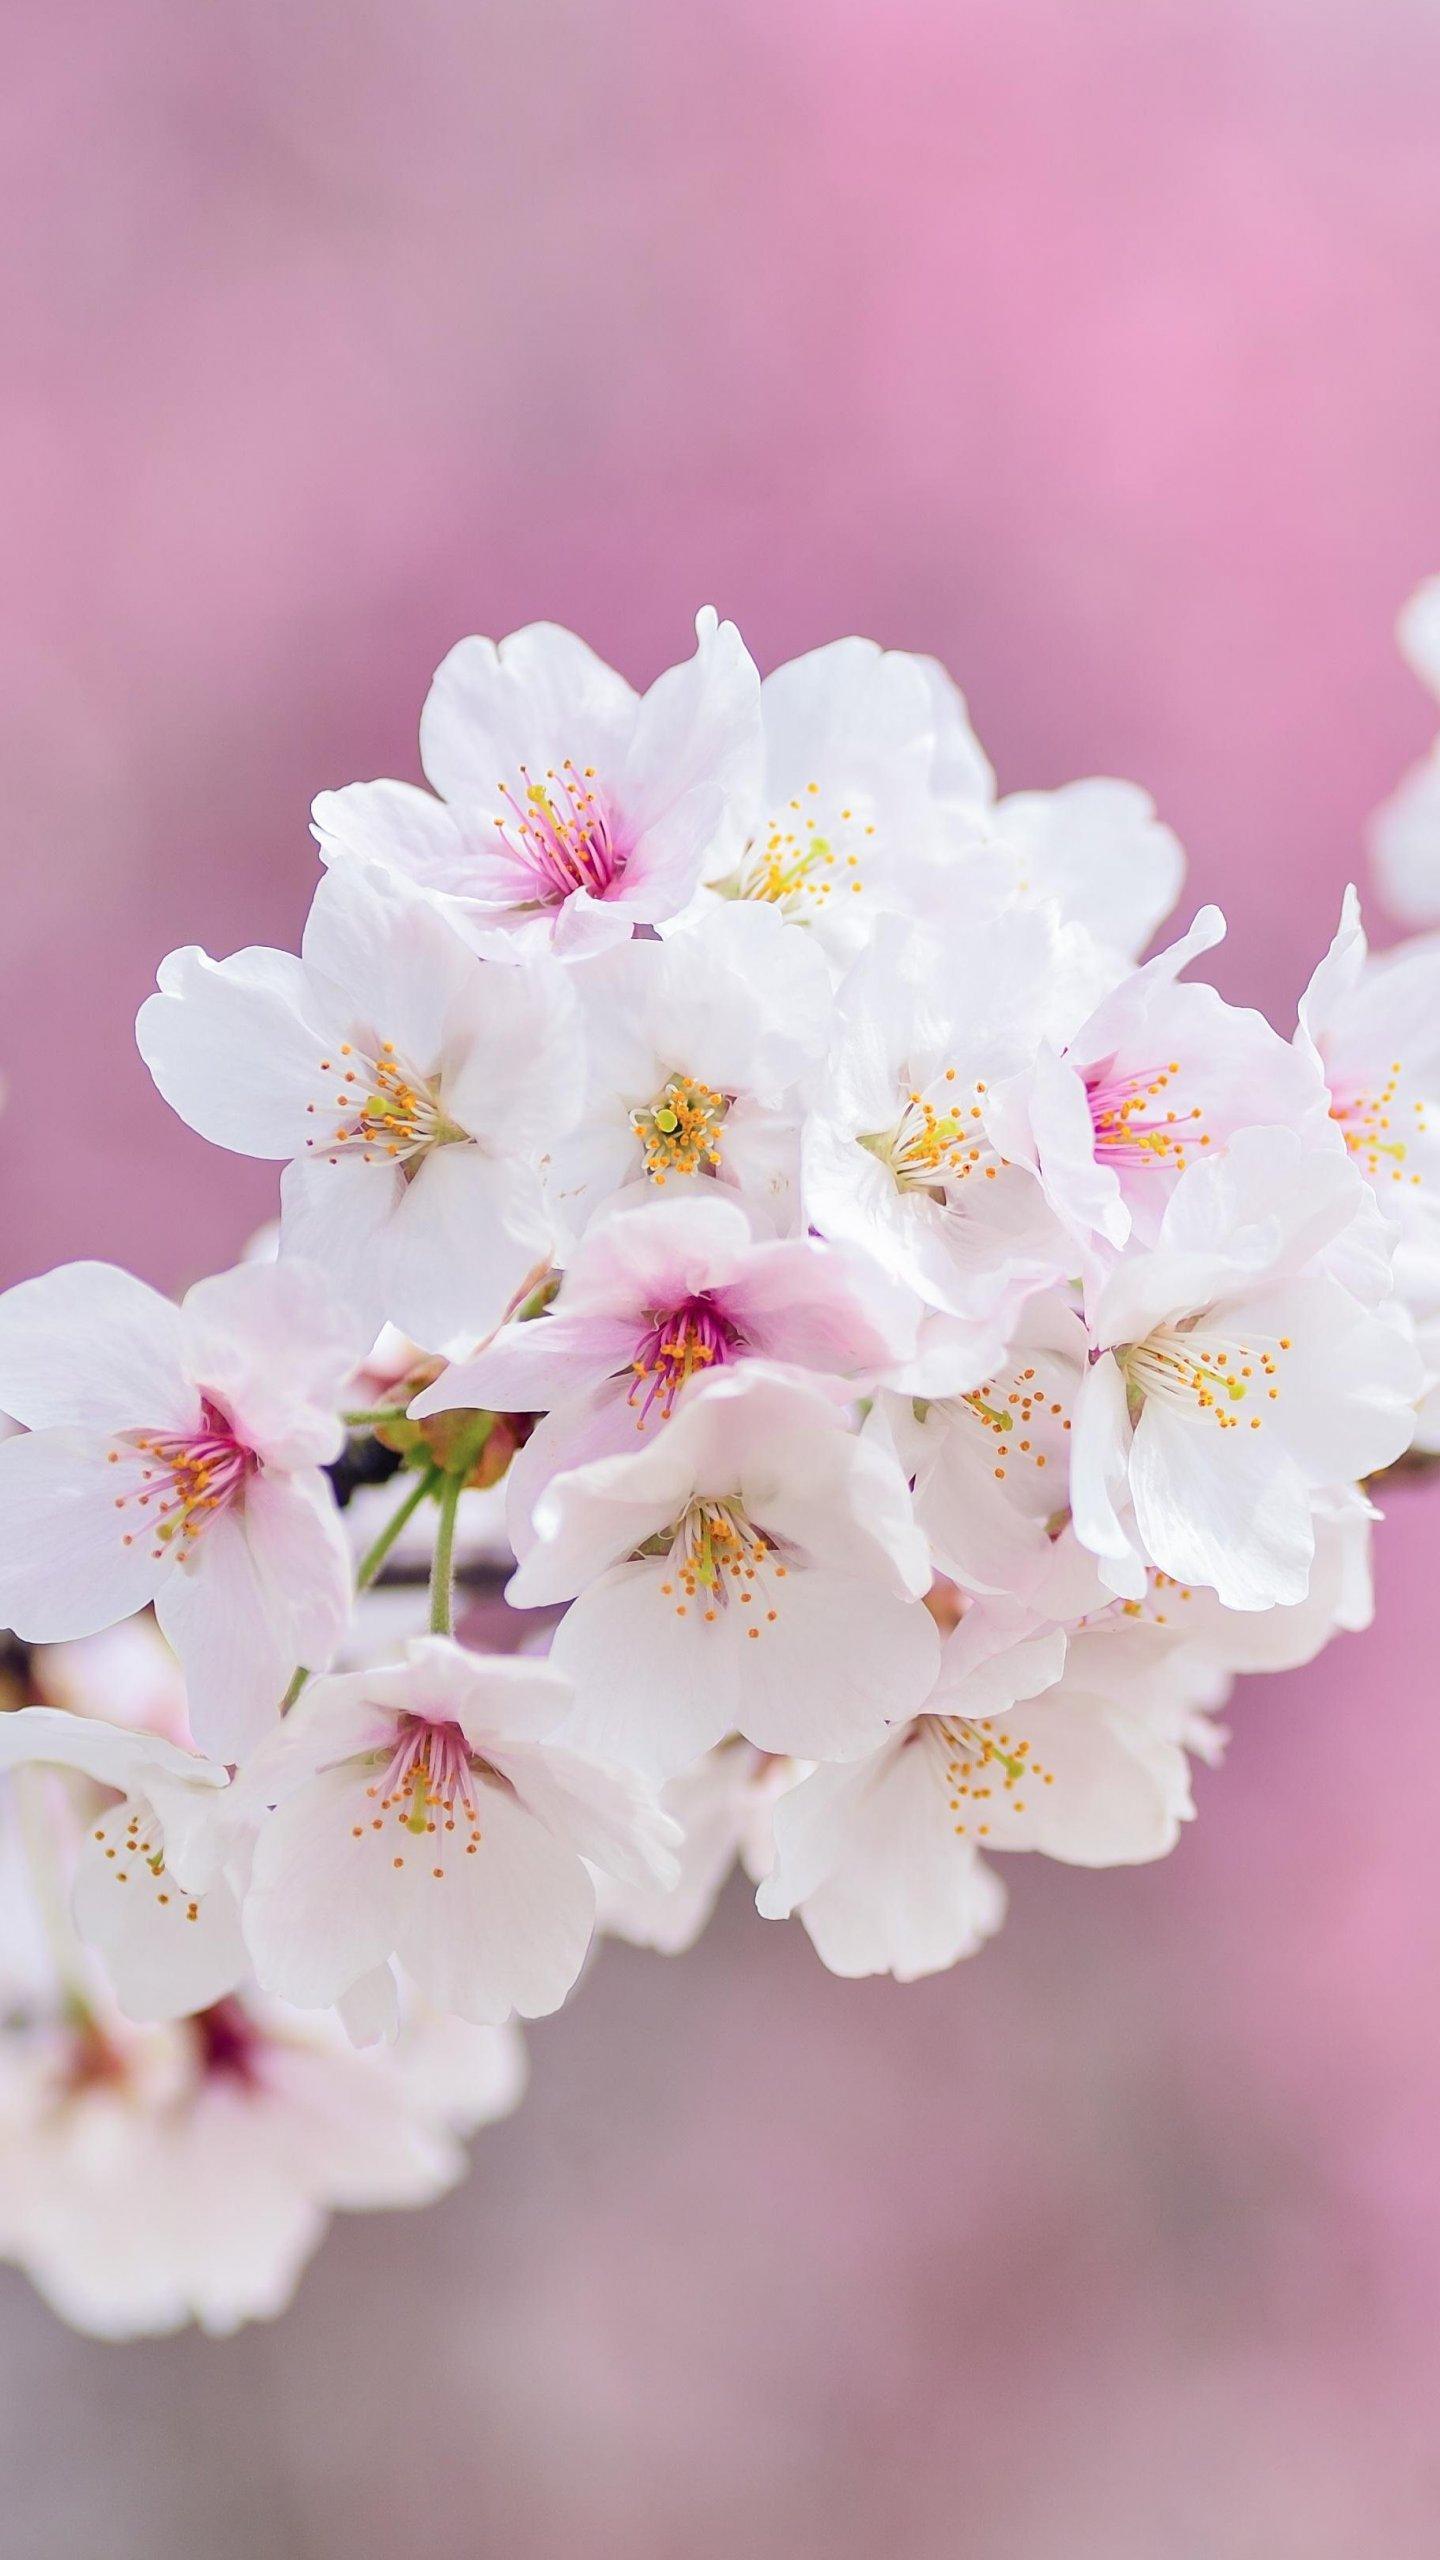 Spring Blossoms Wallpaper, Android & Desktop Background